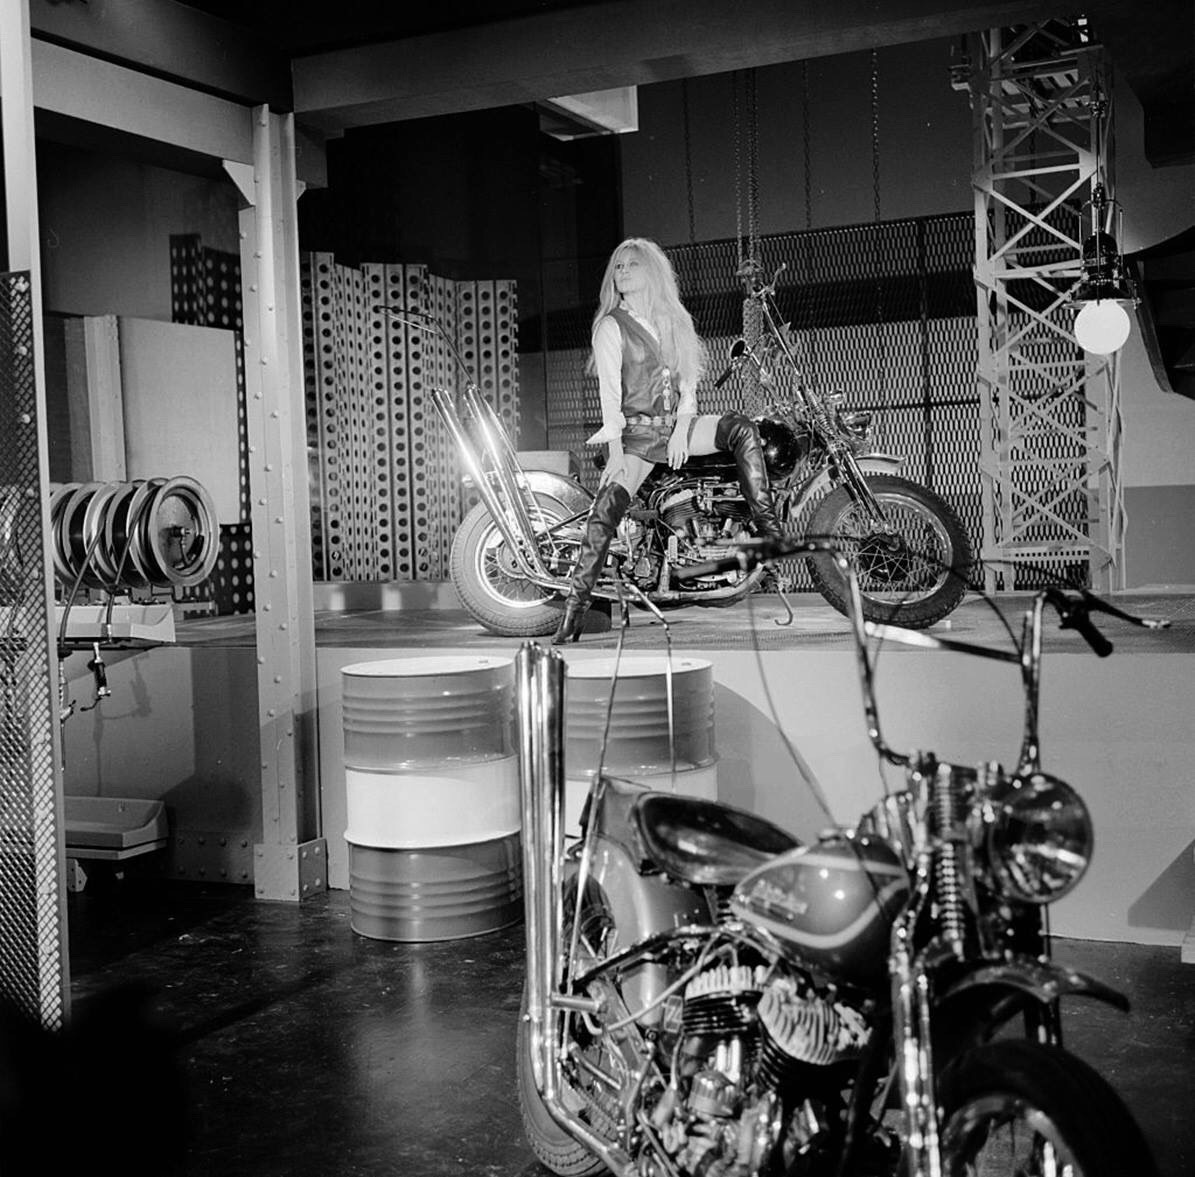 isabelcostasixties:  Brigitte Bardot on one Harley Davidson and Serge Gainsbourg